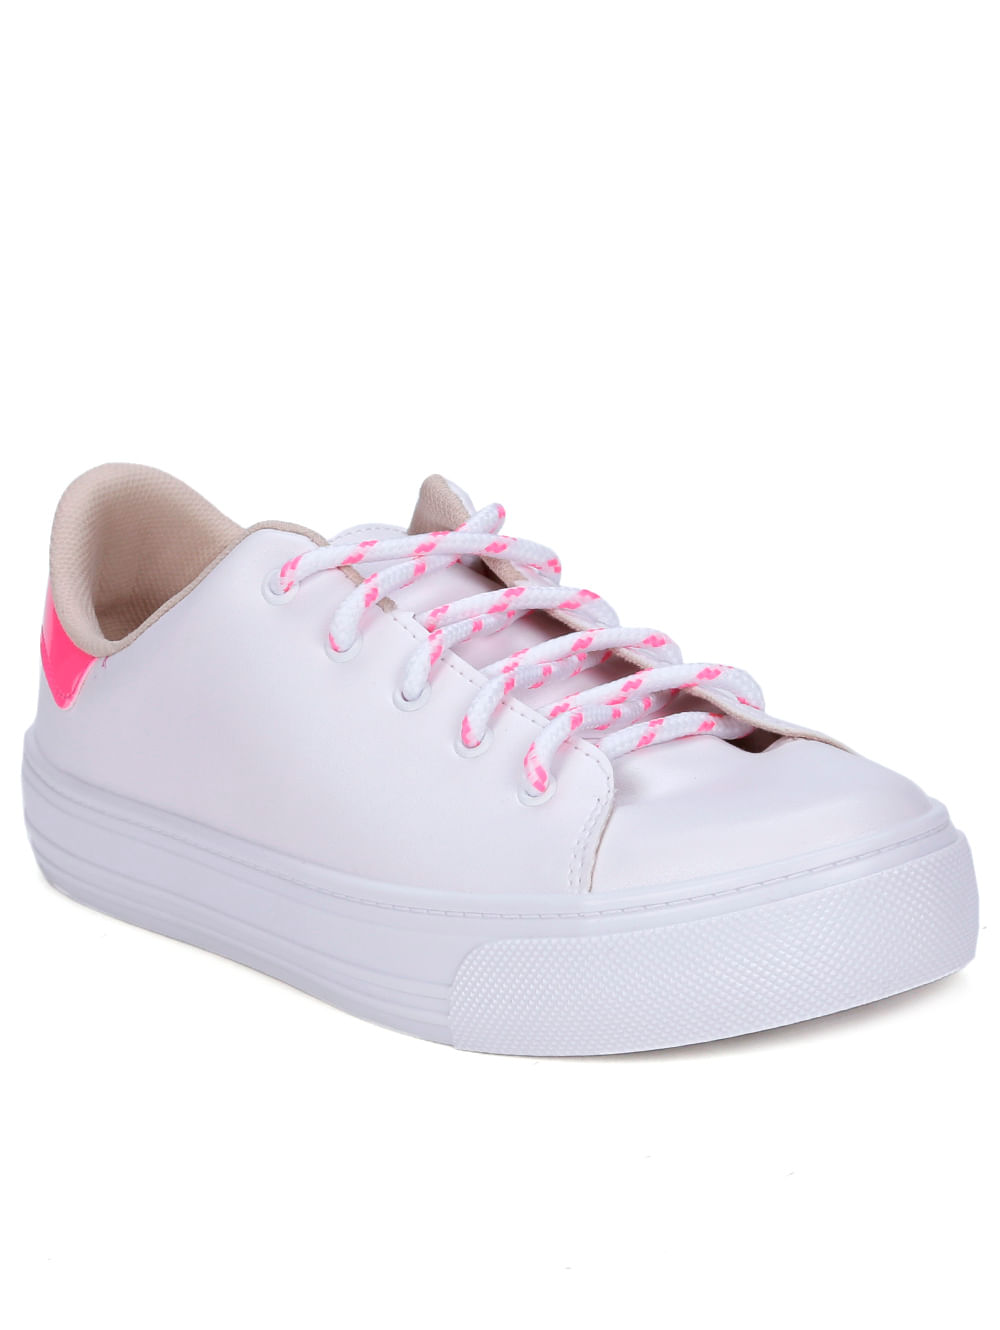 tenis feminino branco e rosa